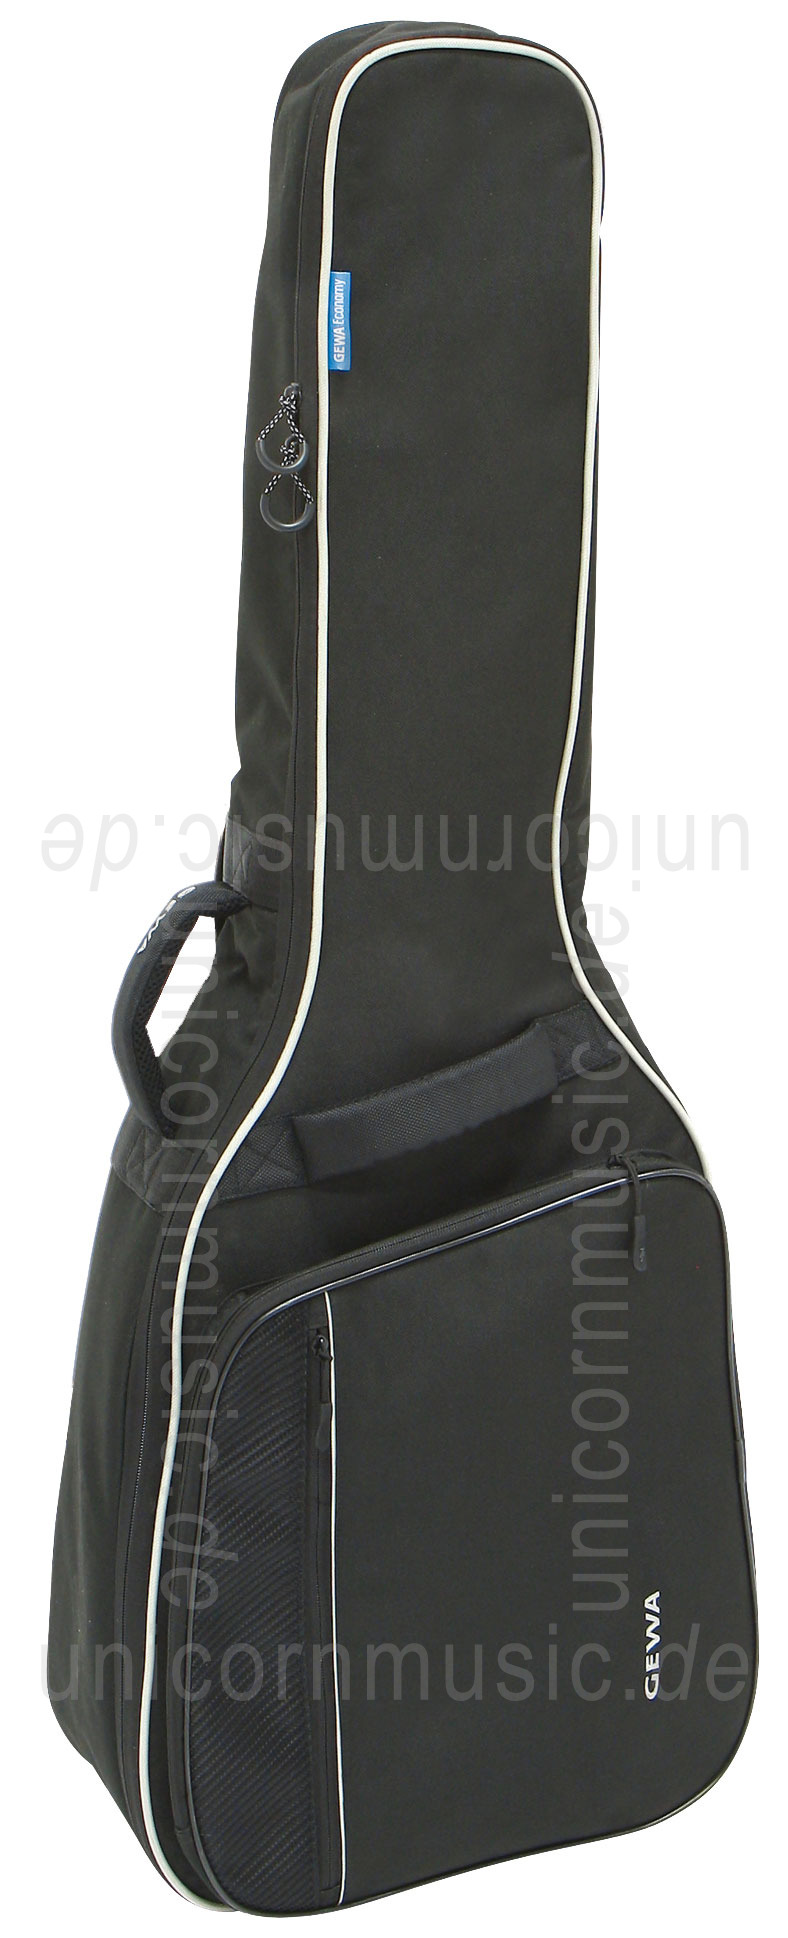 to article description / price Classical Guitar - SALVADOR CORTEZ MODELL CC-22 ce - solid cedar top